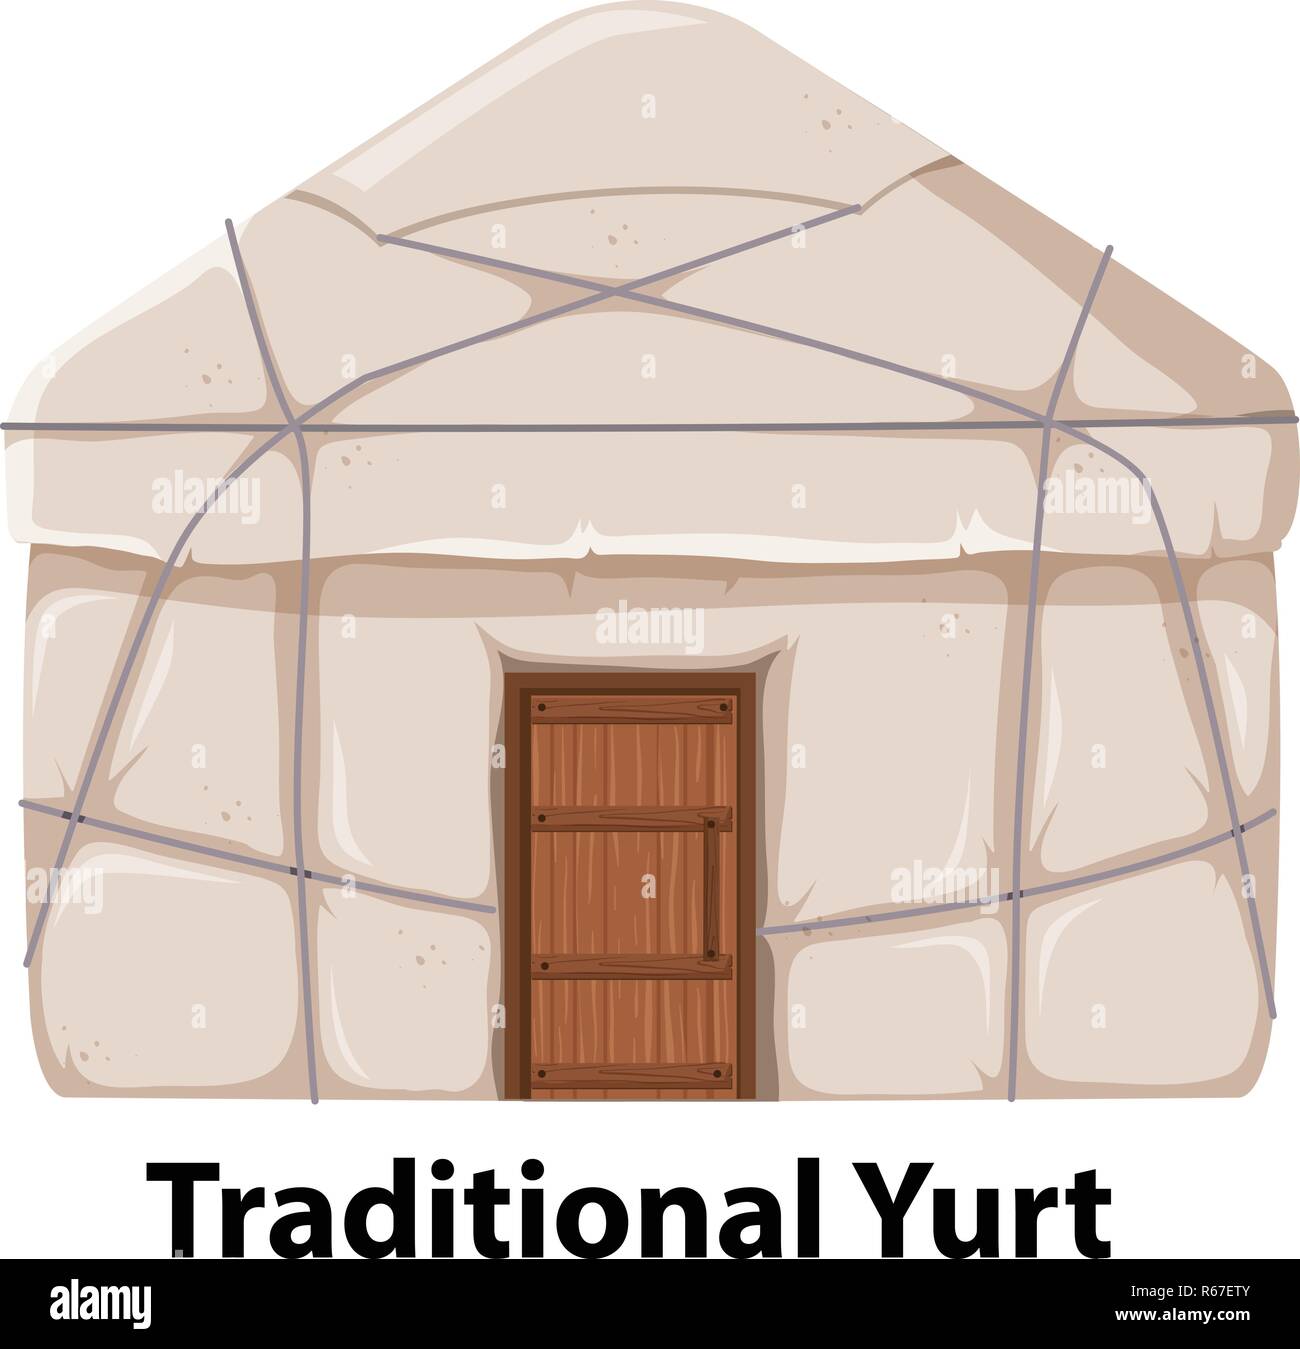 Traditional yurt house on white background illustration Stock Vector